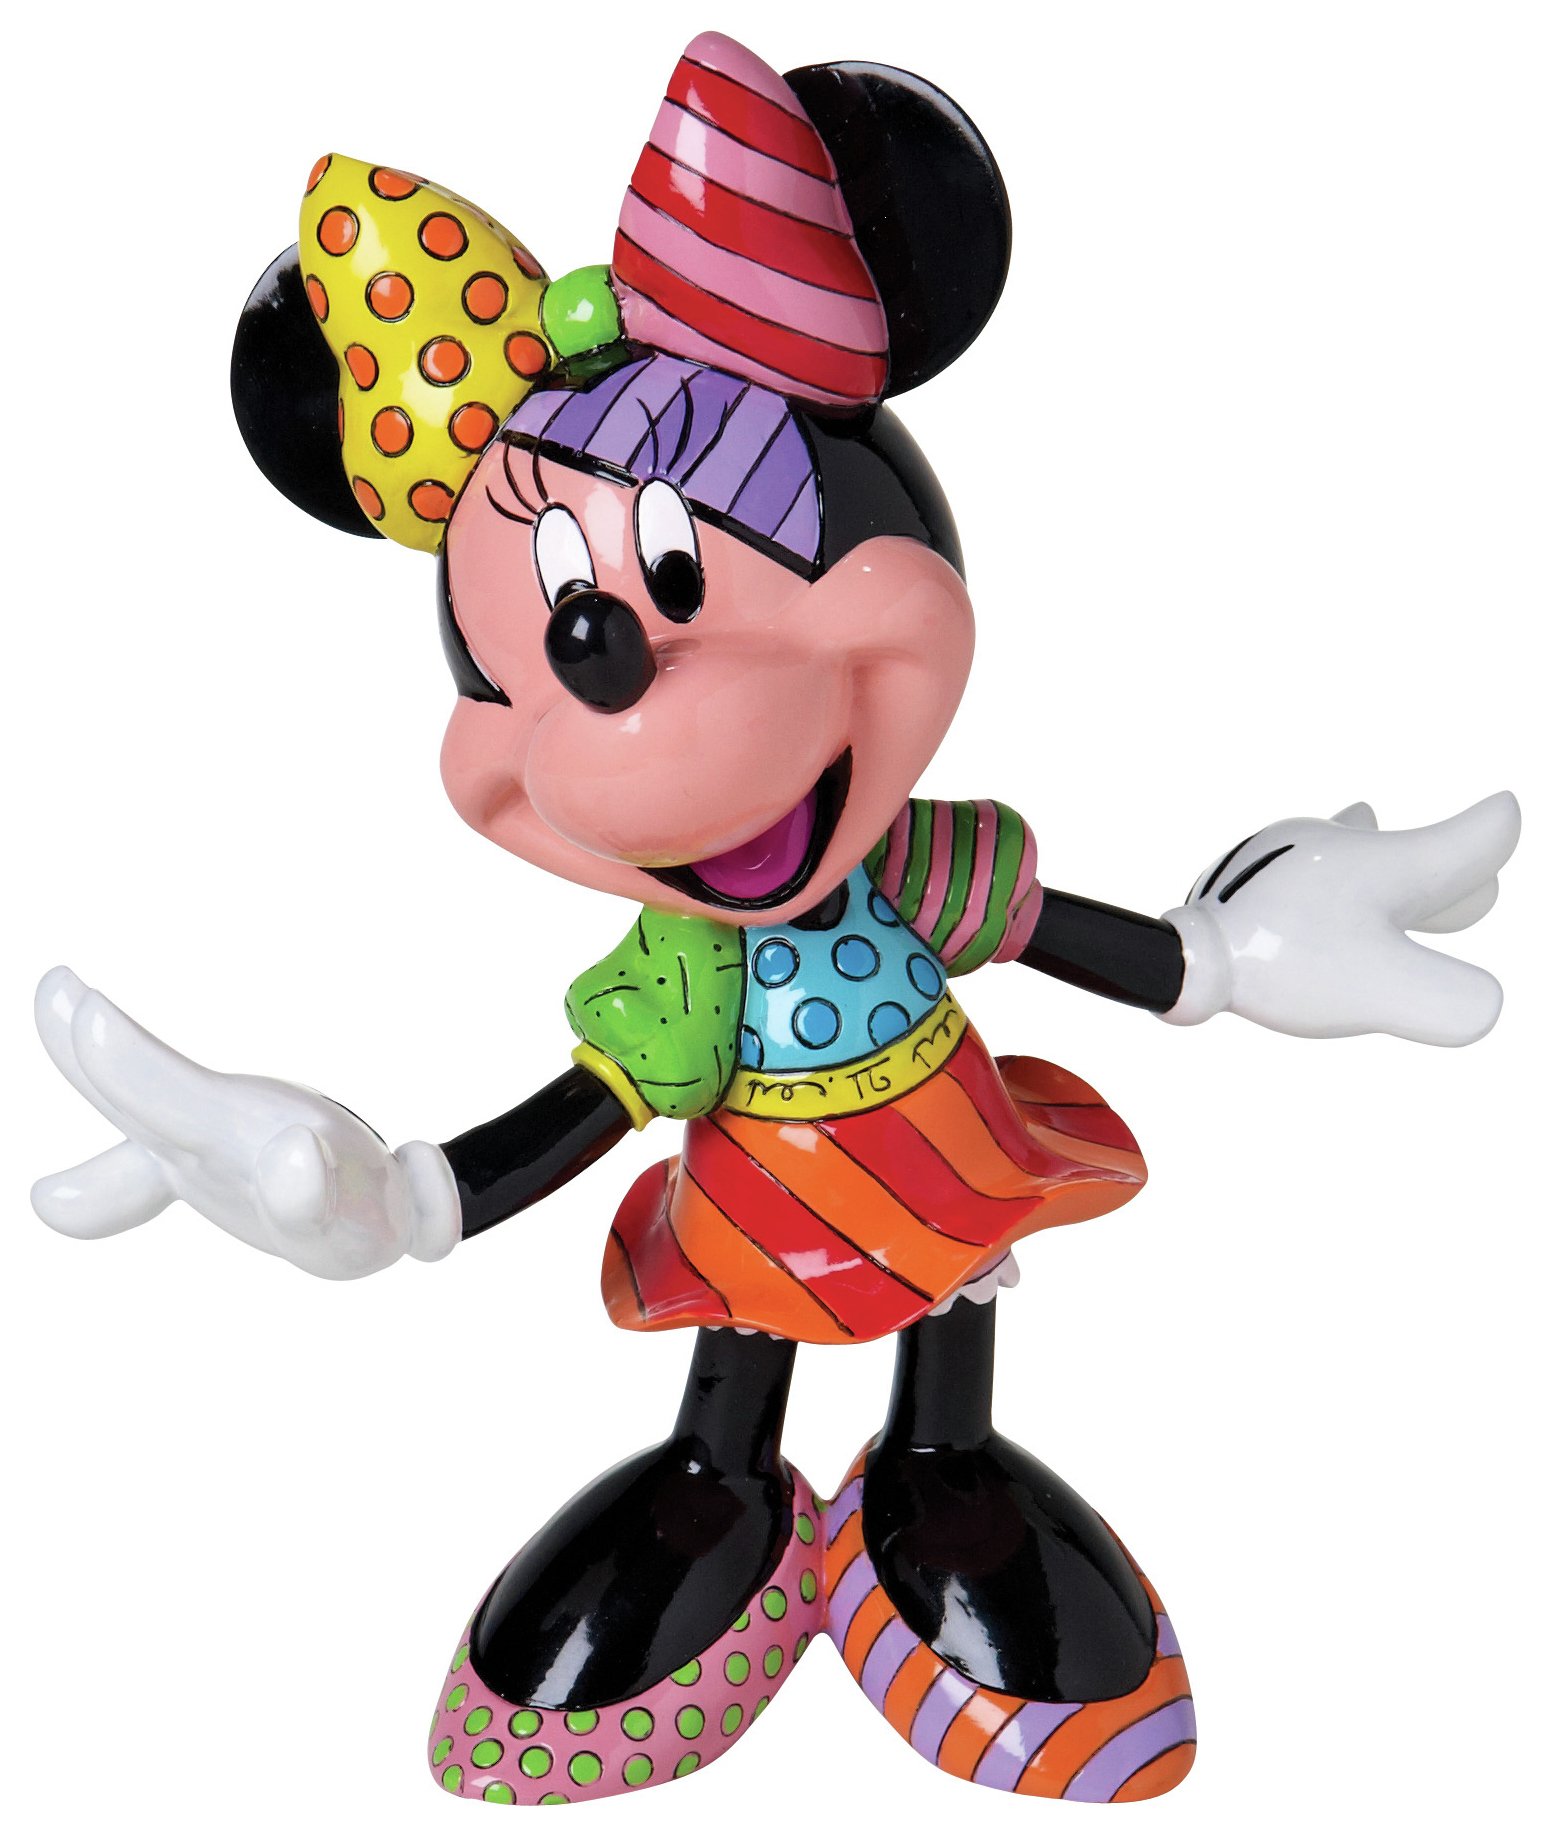 Disney By Britto Minnie Mouse Figurine.